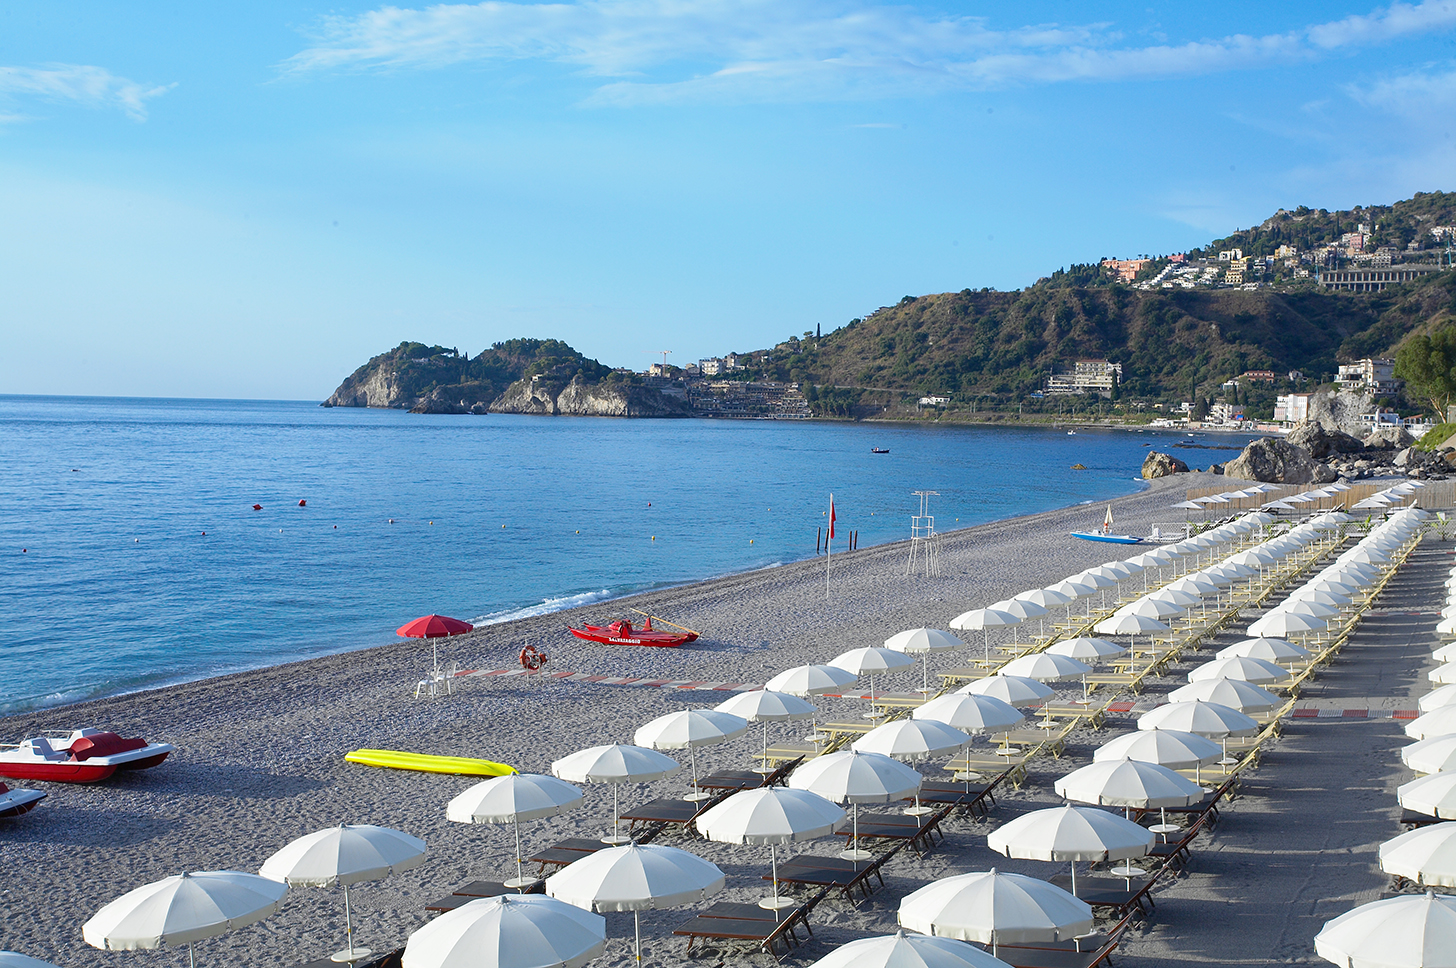 Foto van Spiaggia di Mazzeo met hoog niveau van netheid